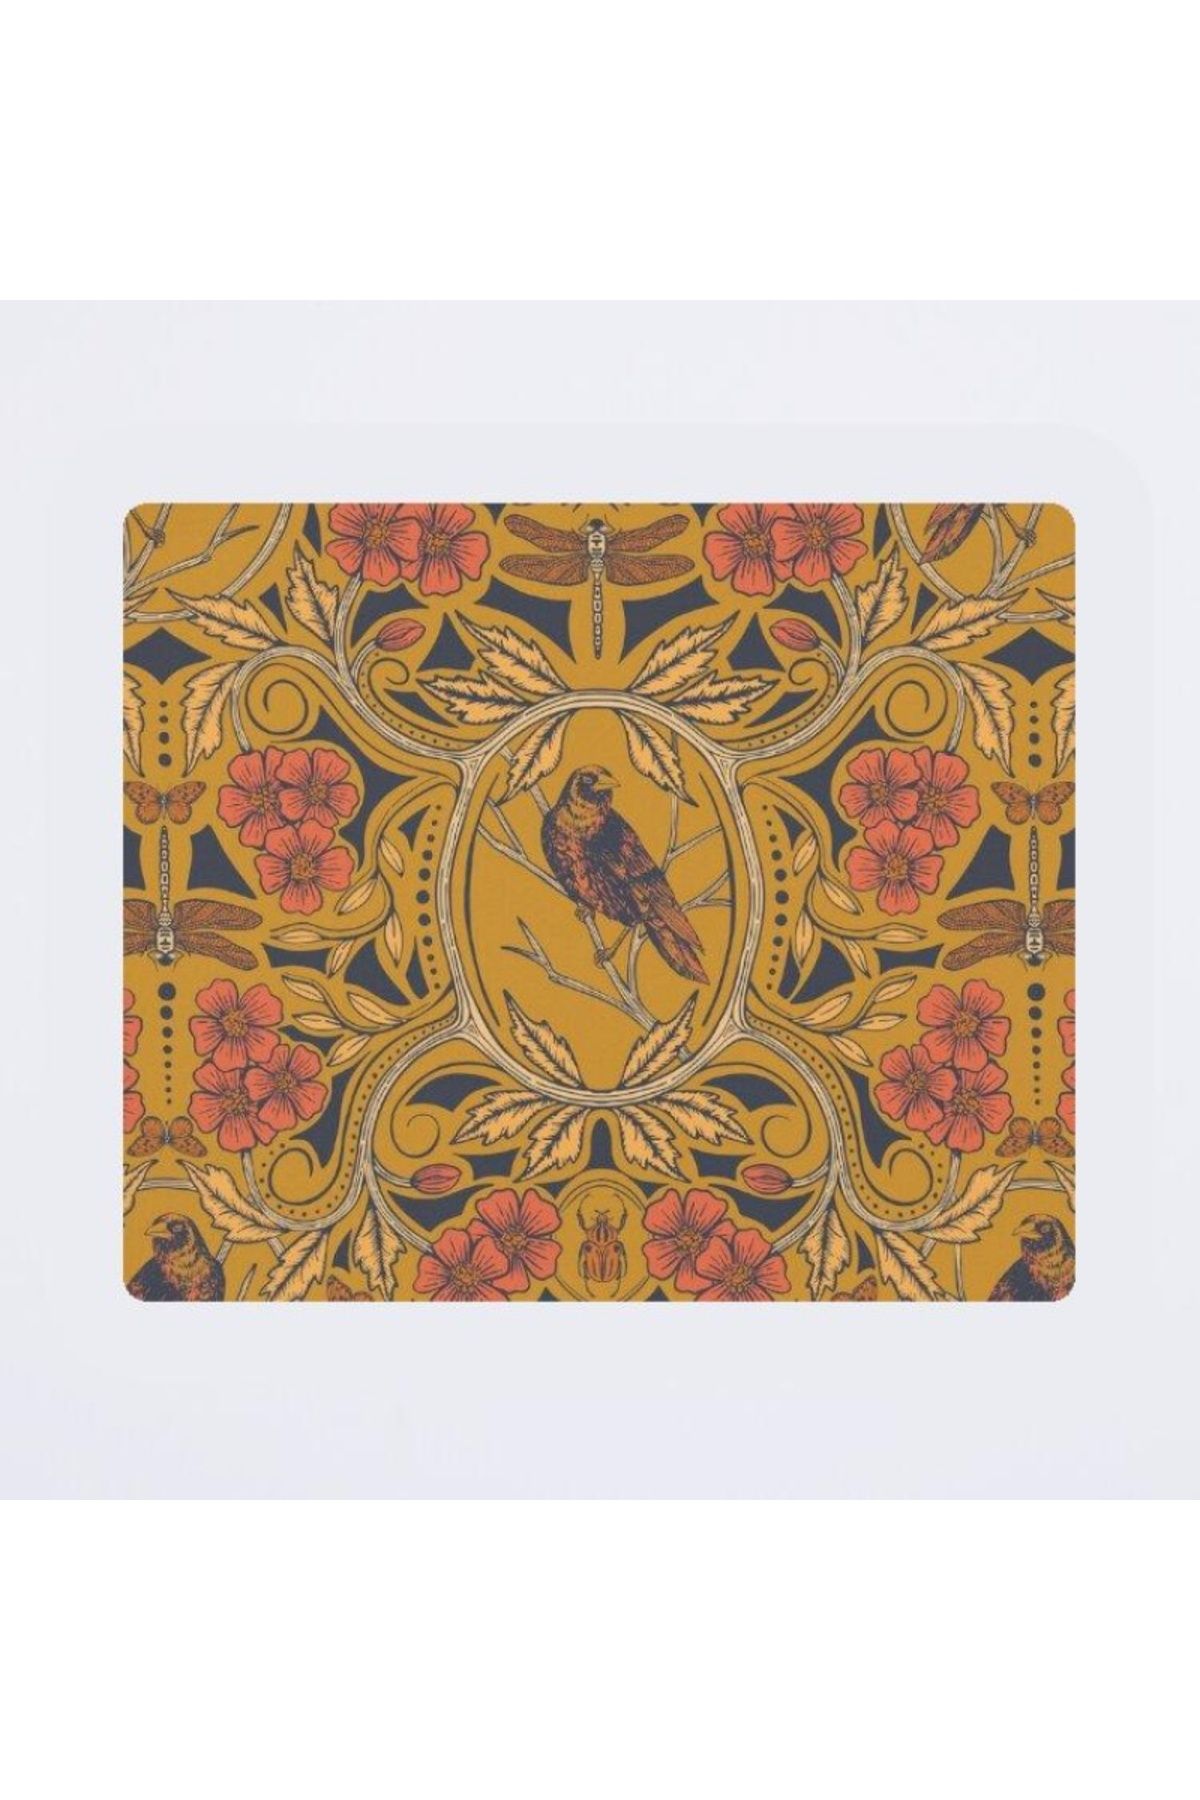 w house Baskılı Mouse pad 000714 18X22/2mm Warm Mustard Yellow & Orange Crow & Dragonfly Floral